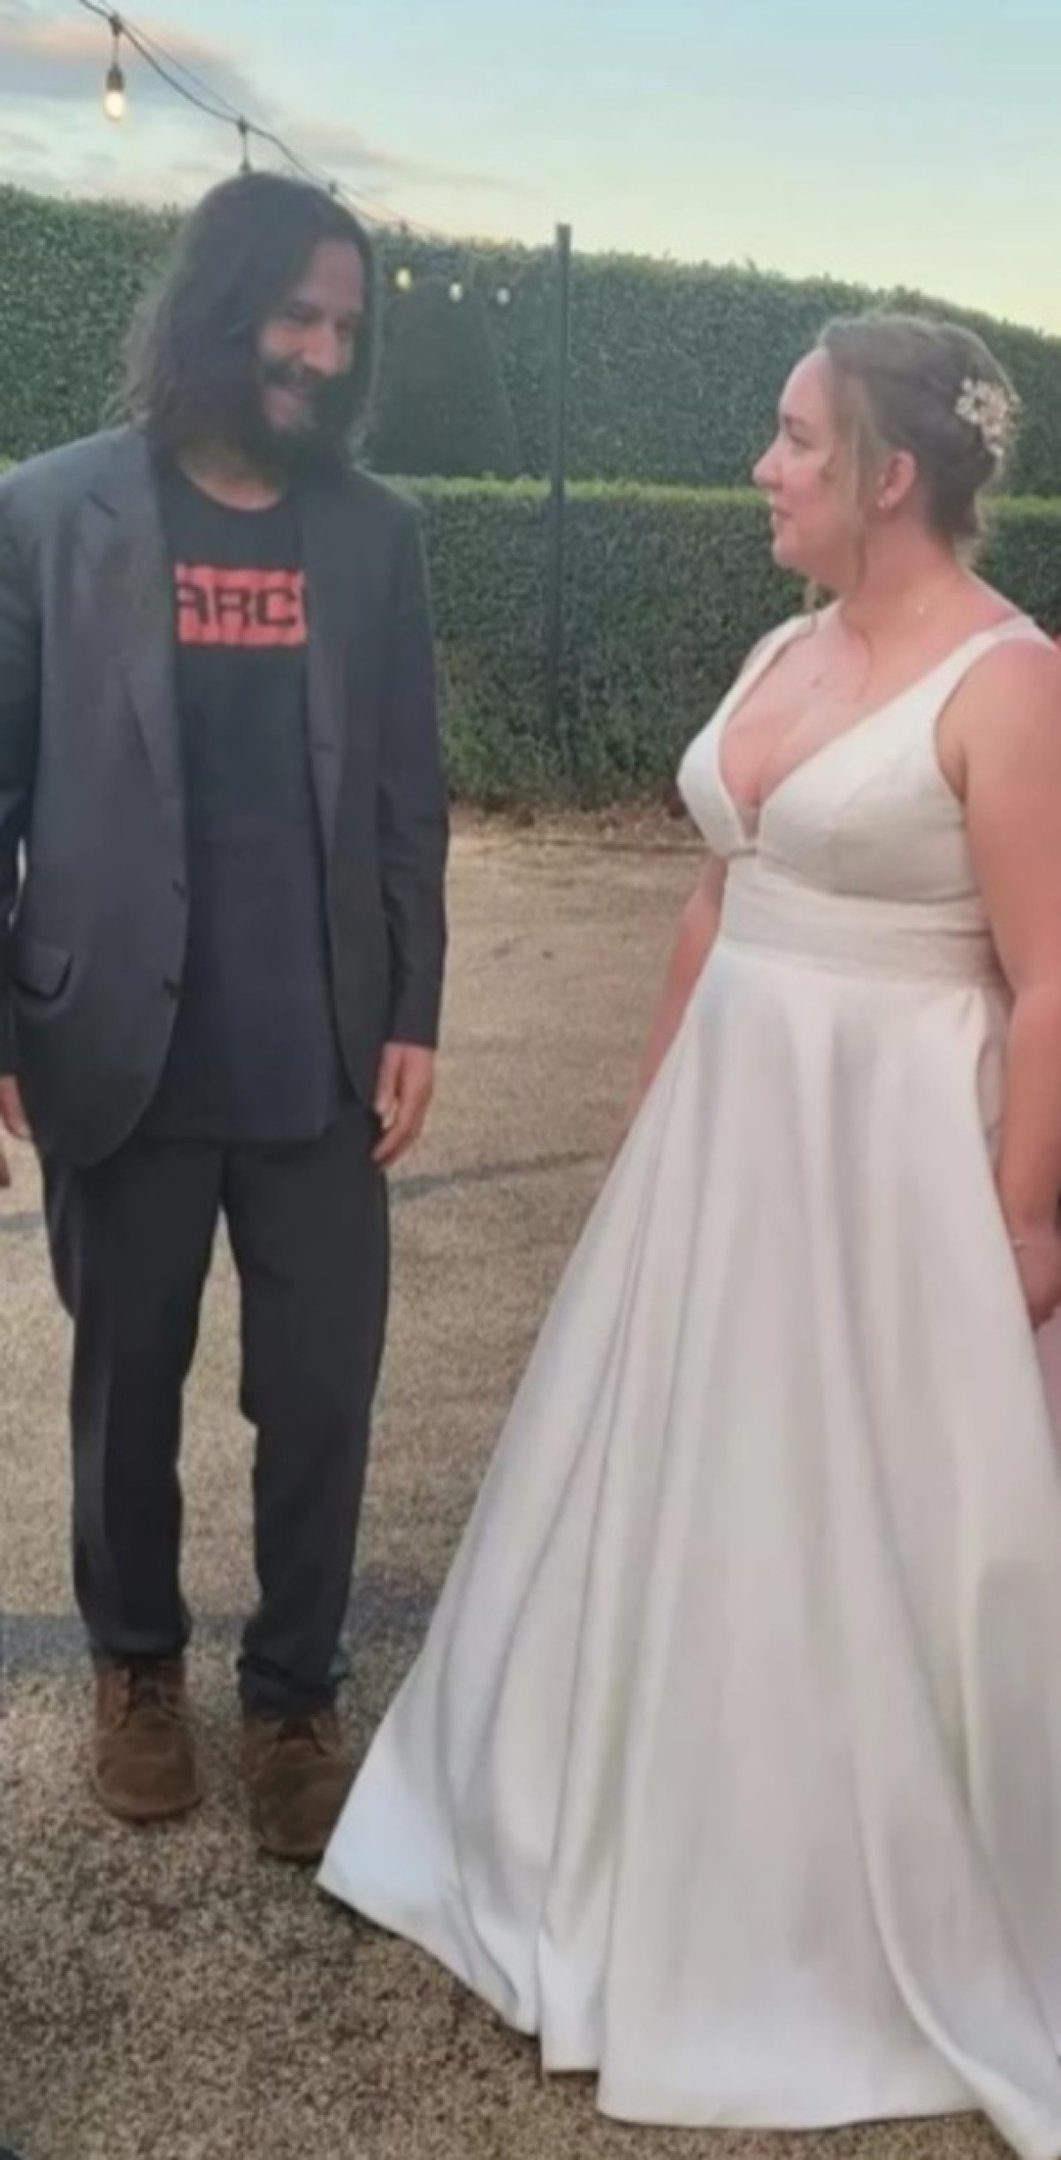 Keanu Reeves and Nicki during their wedding